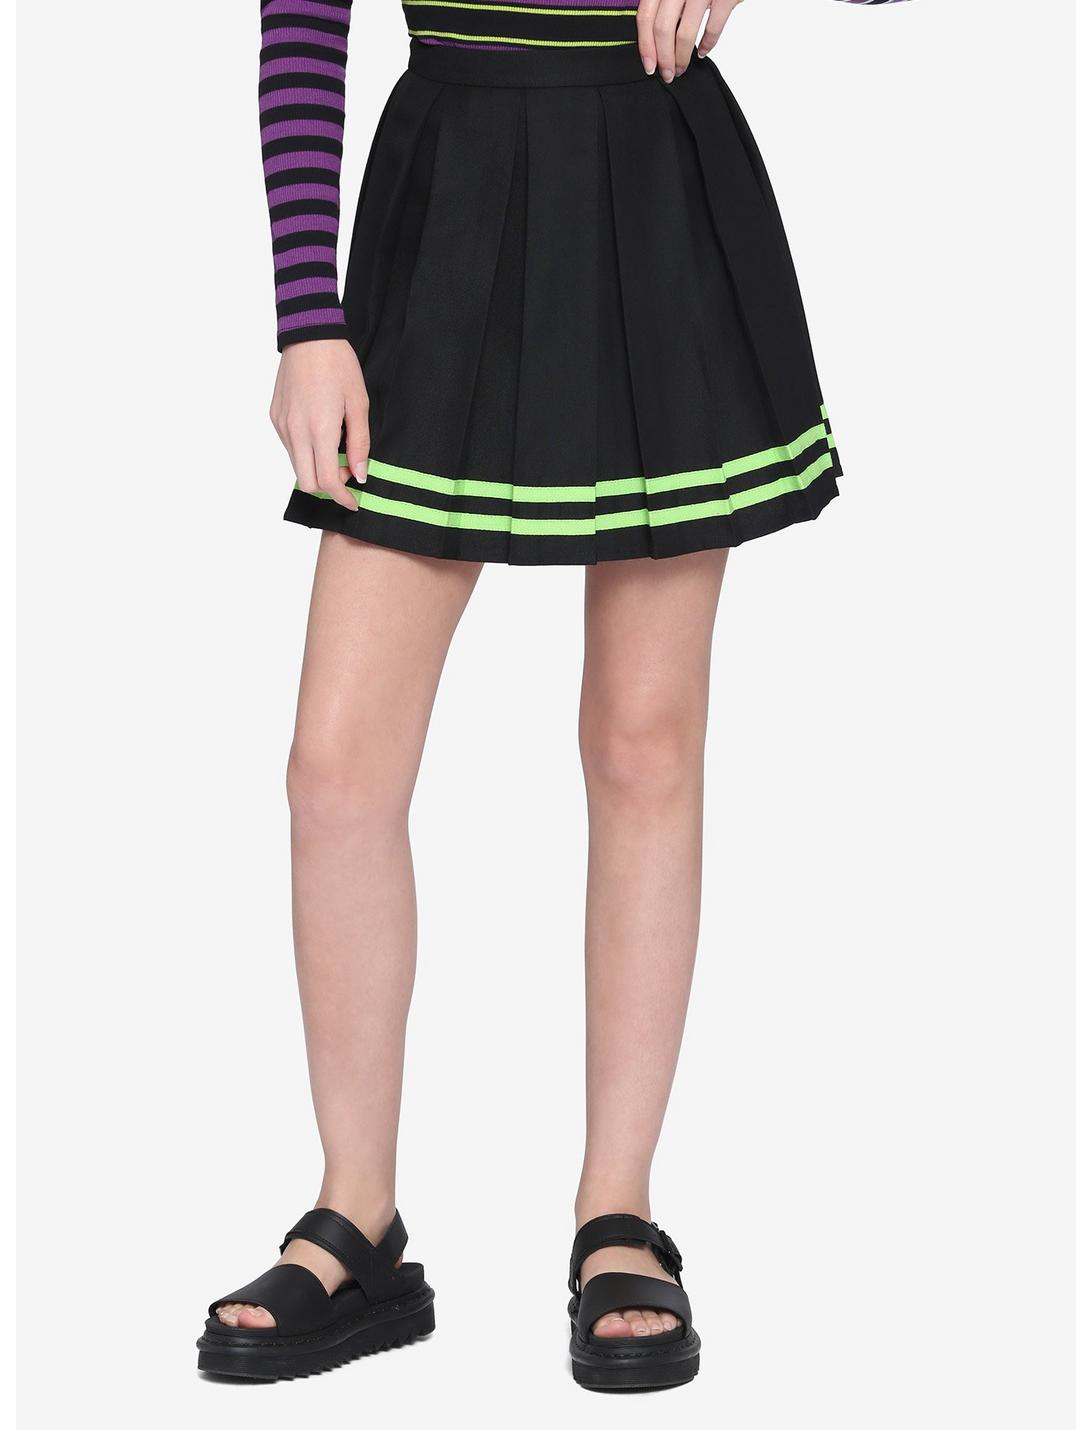 Black & Green Pleated Cheer Skirt, GREEN, hi-res